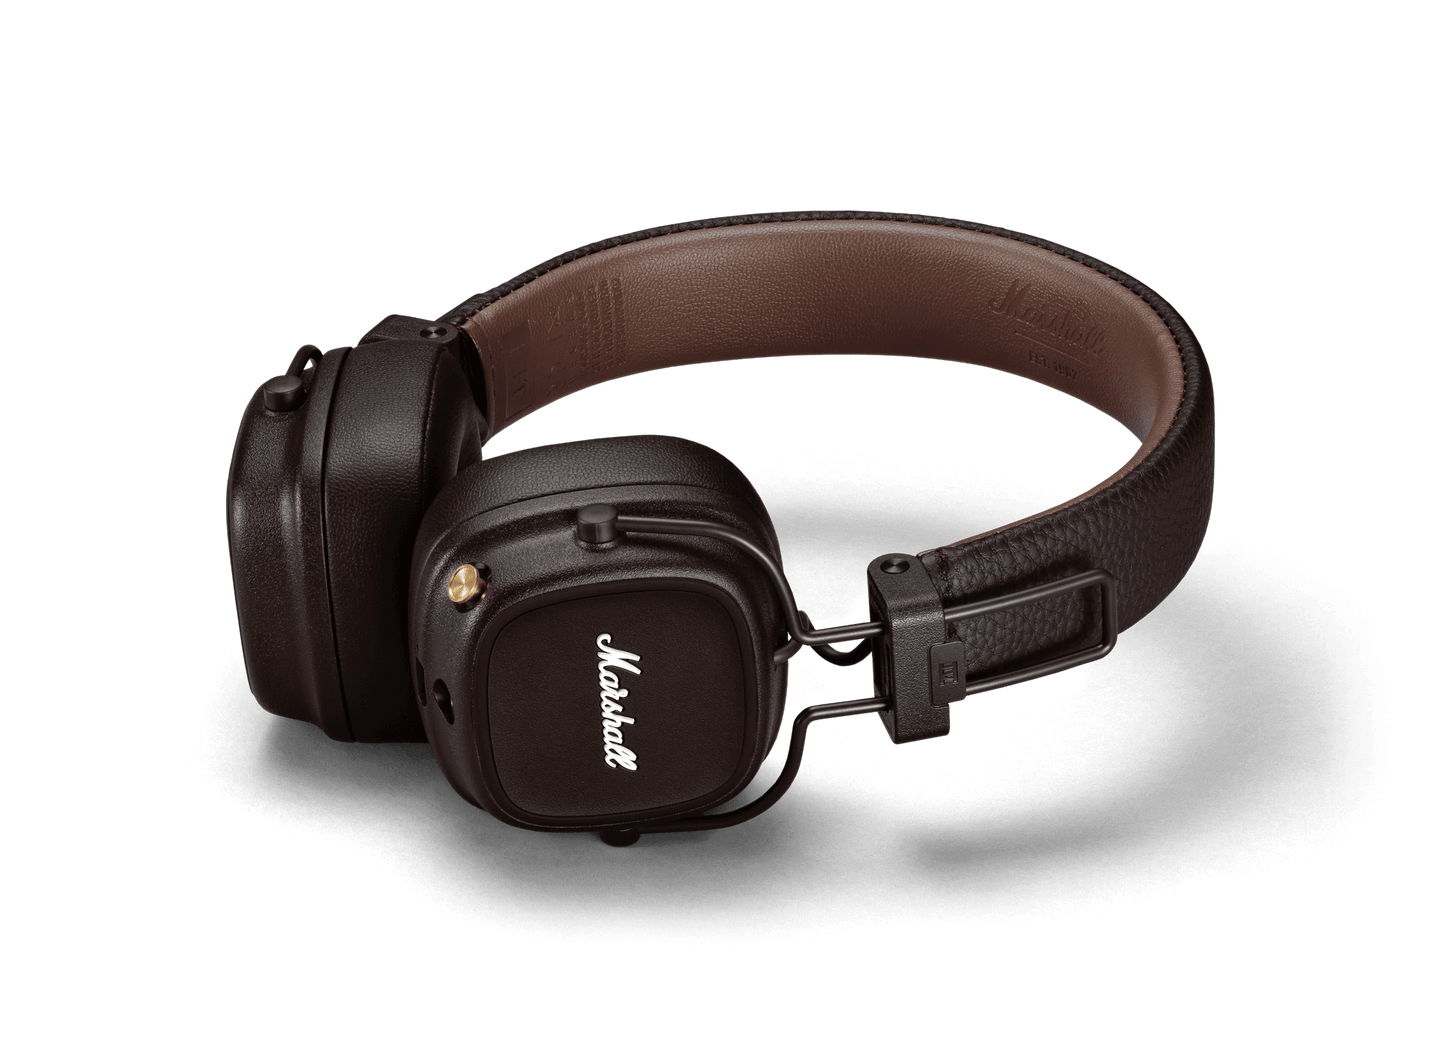 Marshall Major Iv Bt Headphones Brown - New Ean 7340055388665